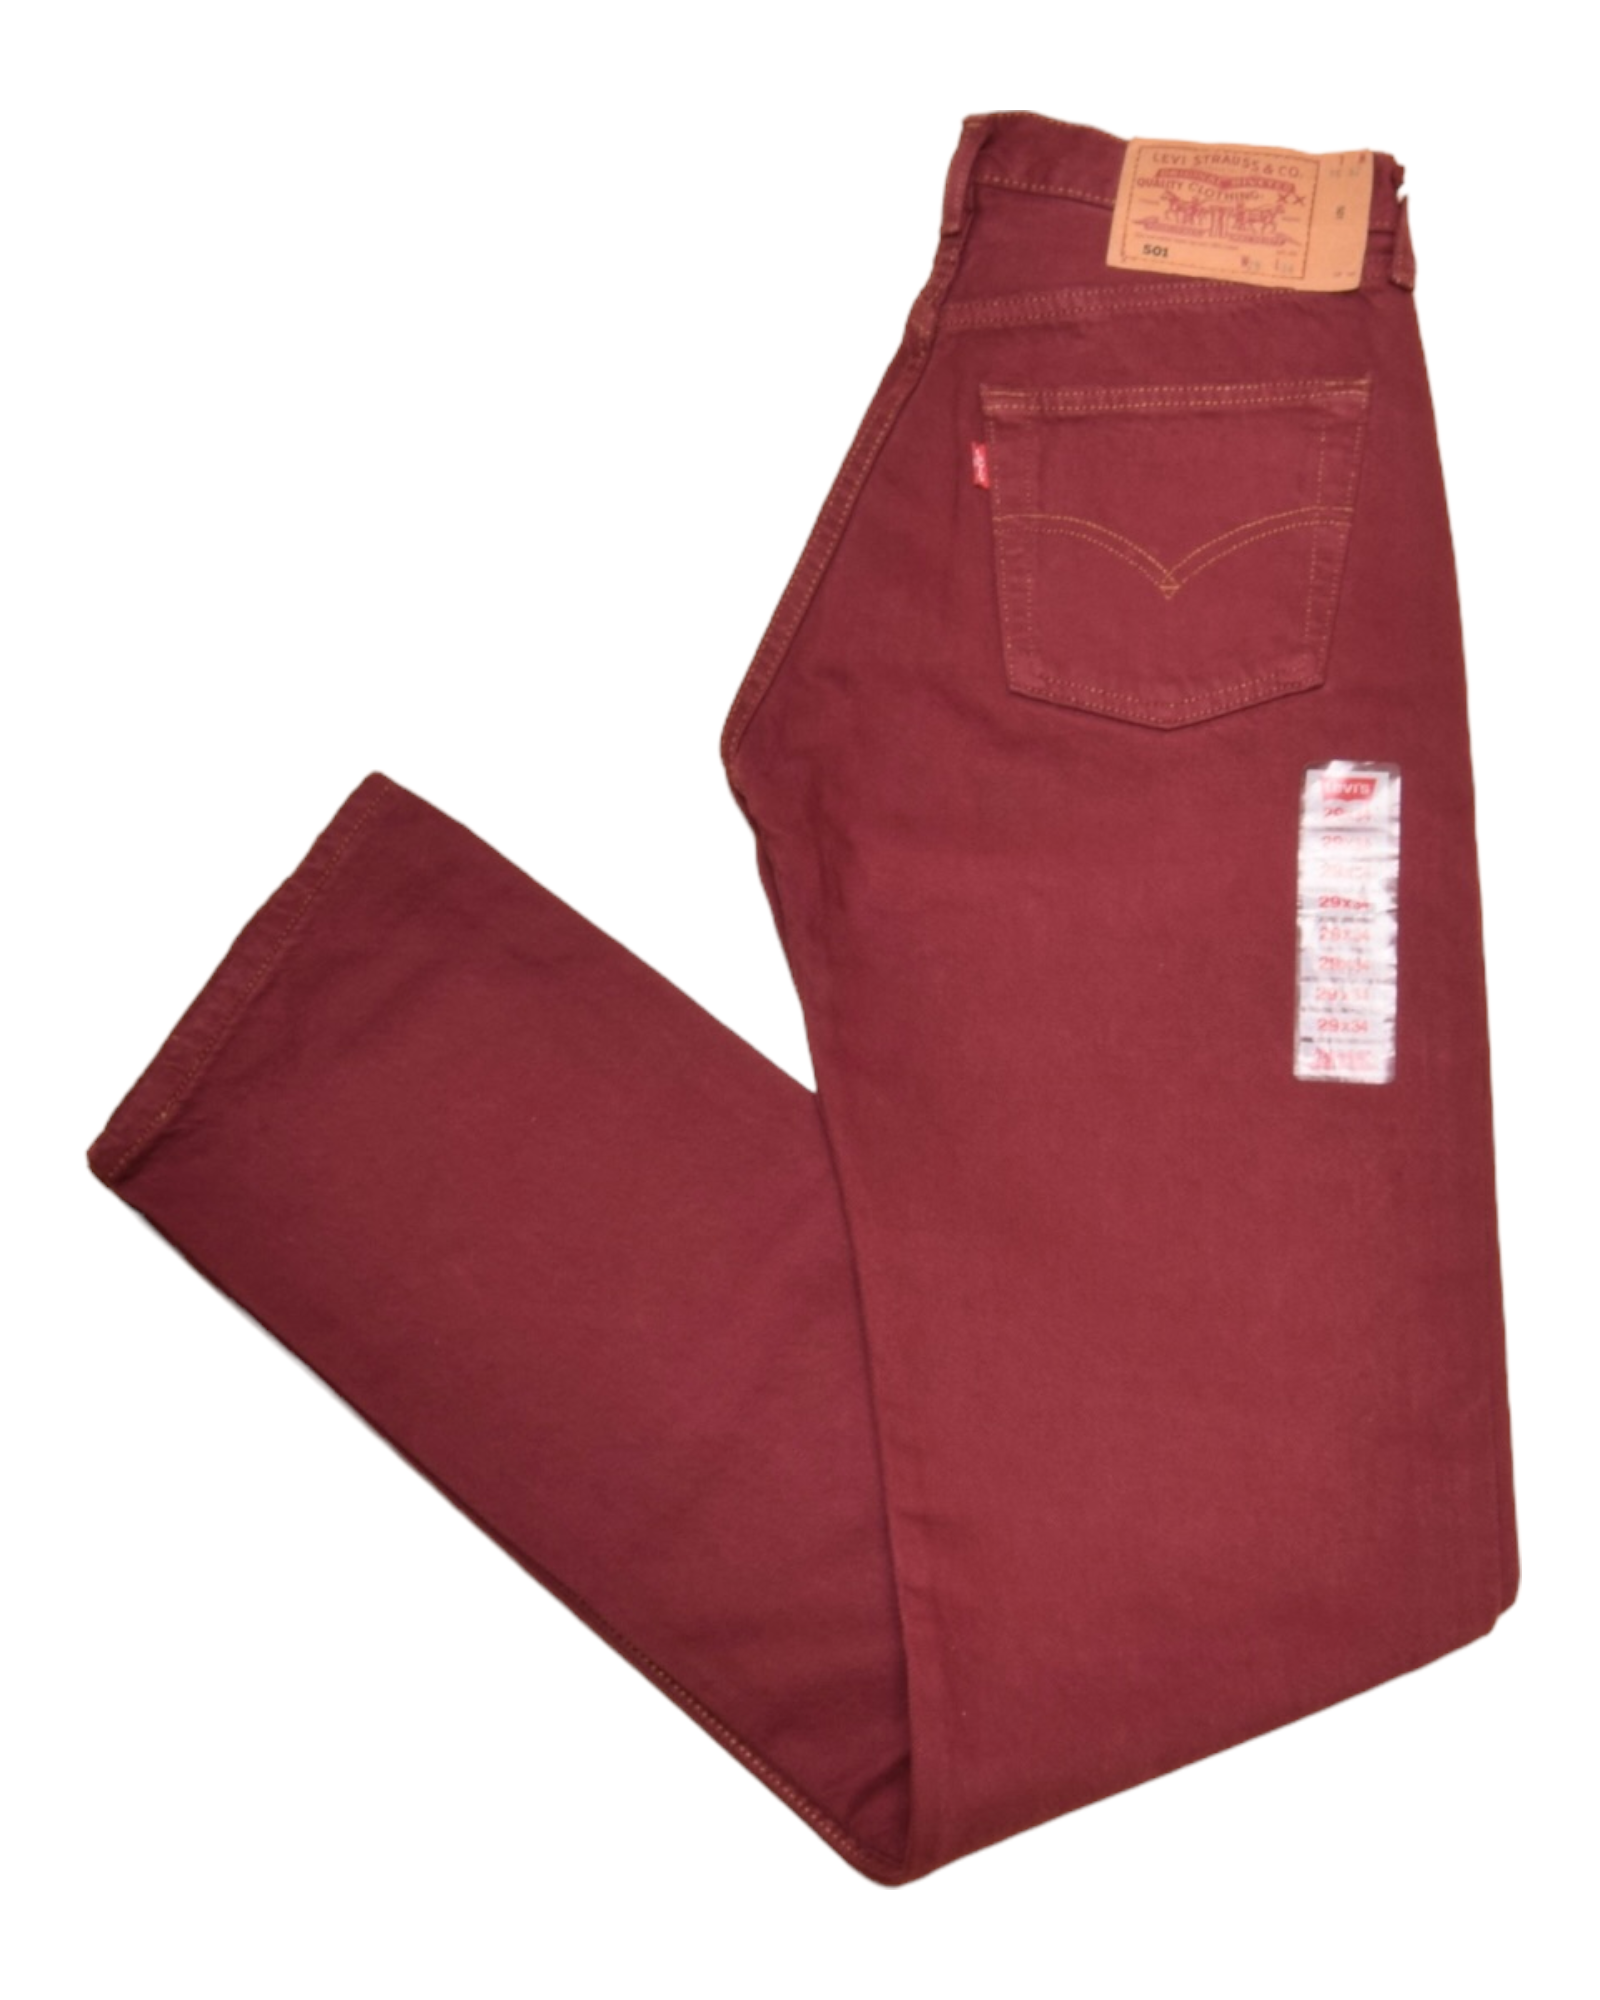 Levi's Strauss 501 Denim Jeans Pants W29L34 Burgundy